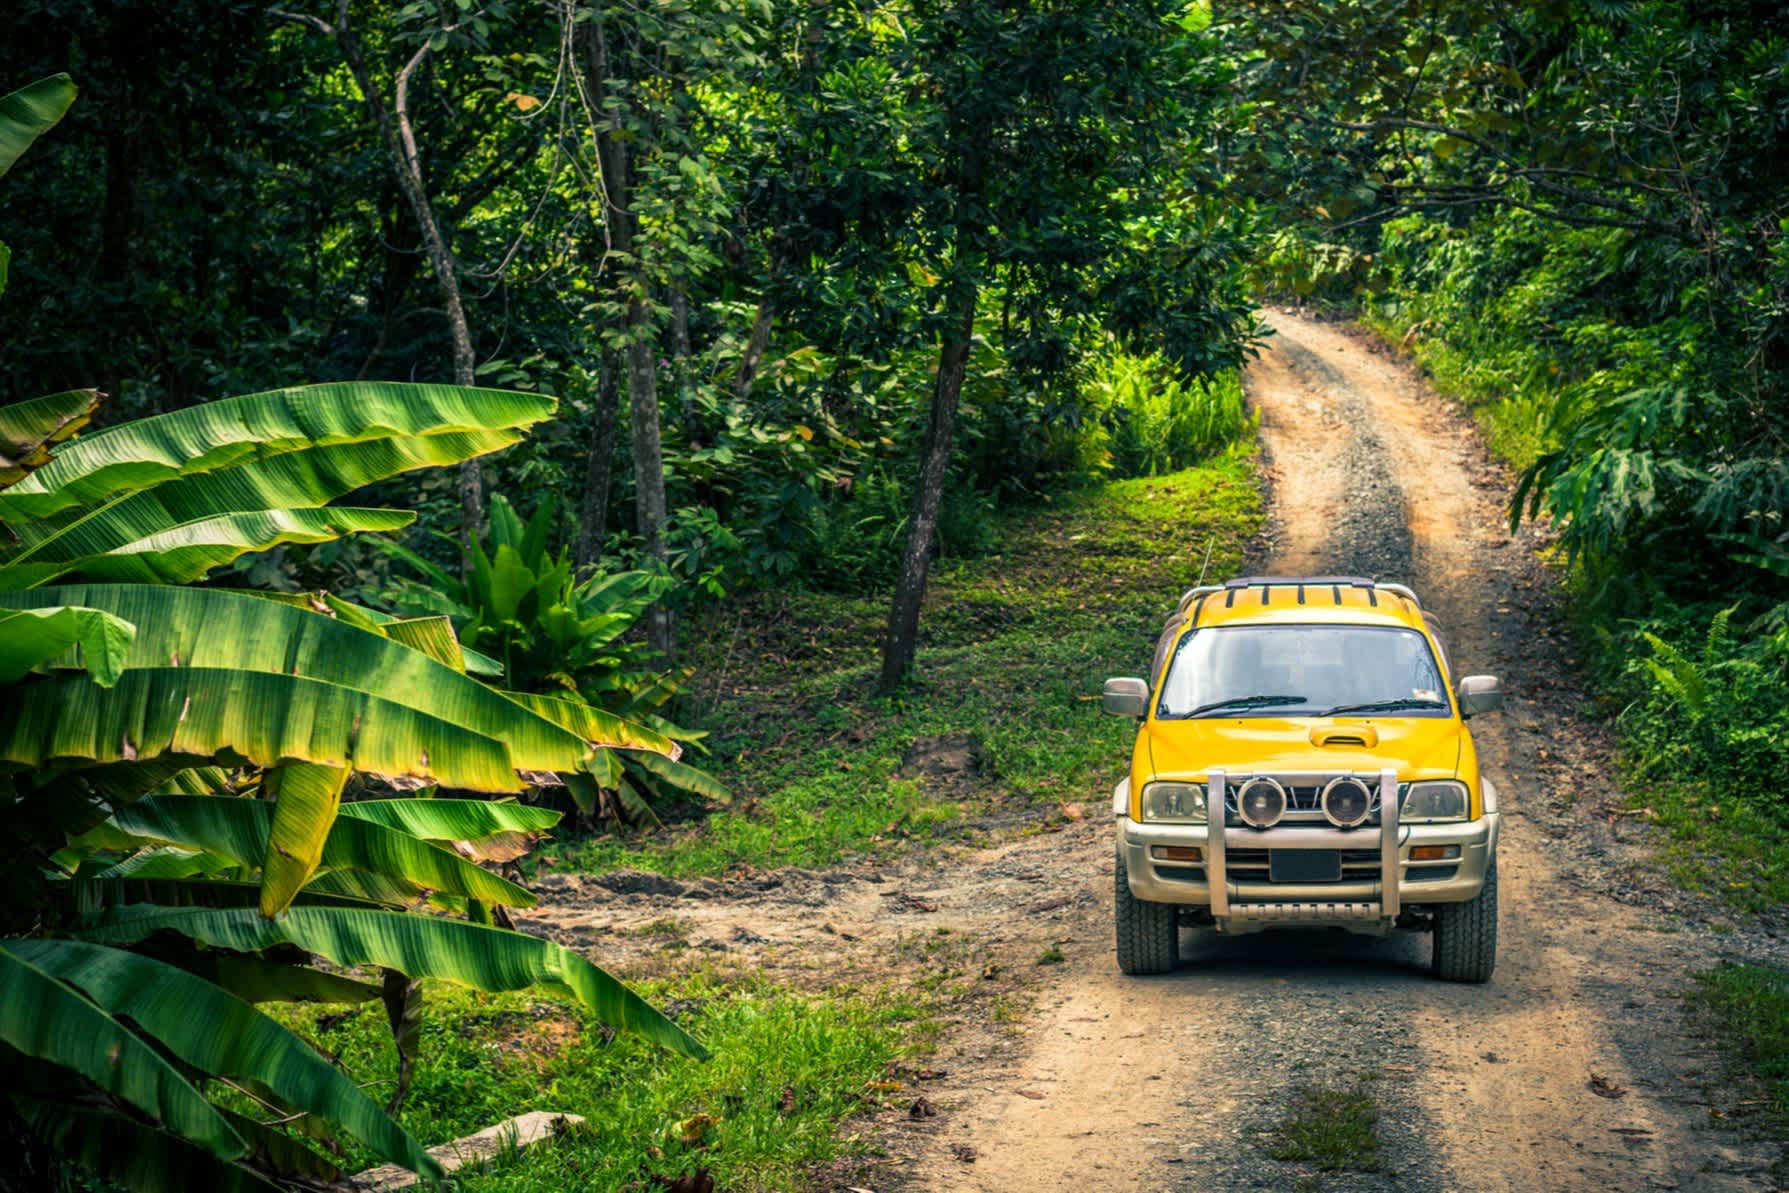 Jeep im Dschungel, Malaysia

